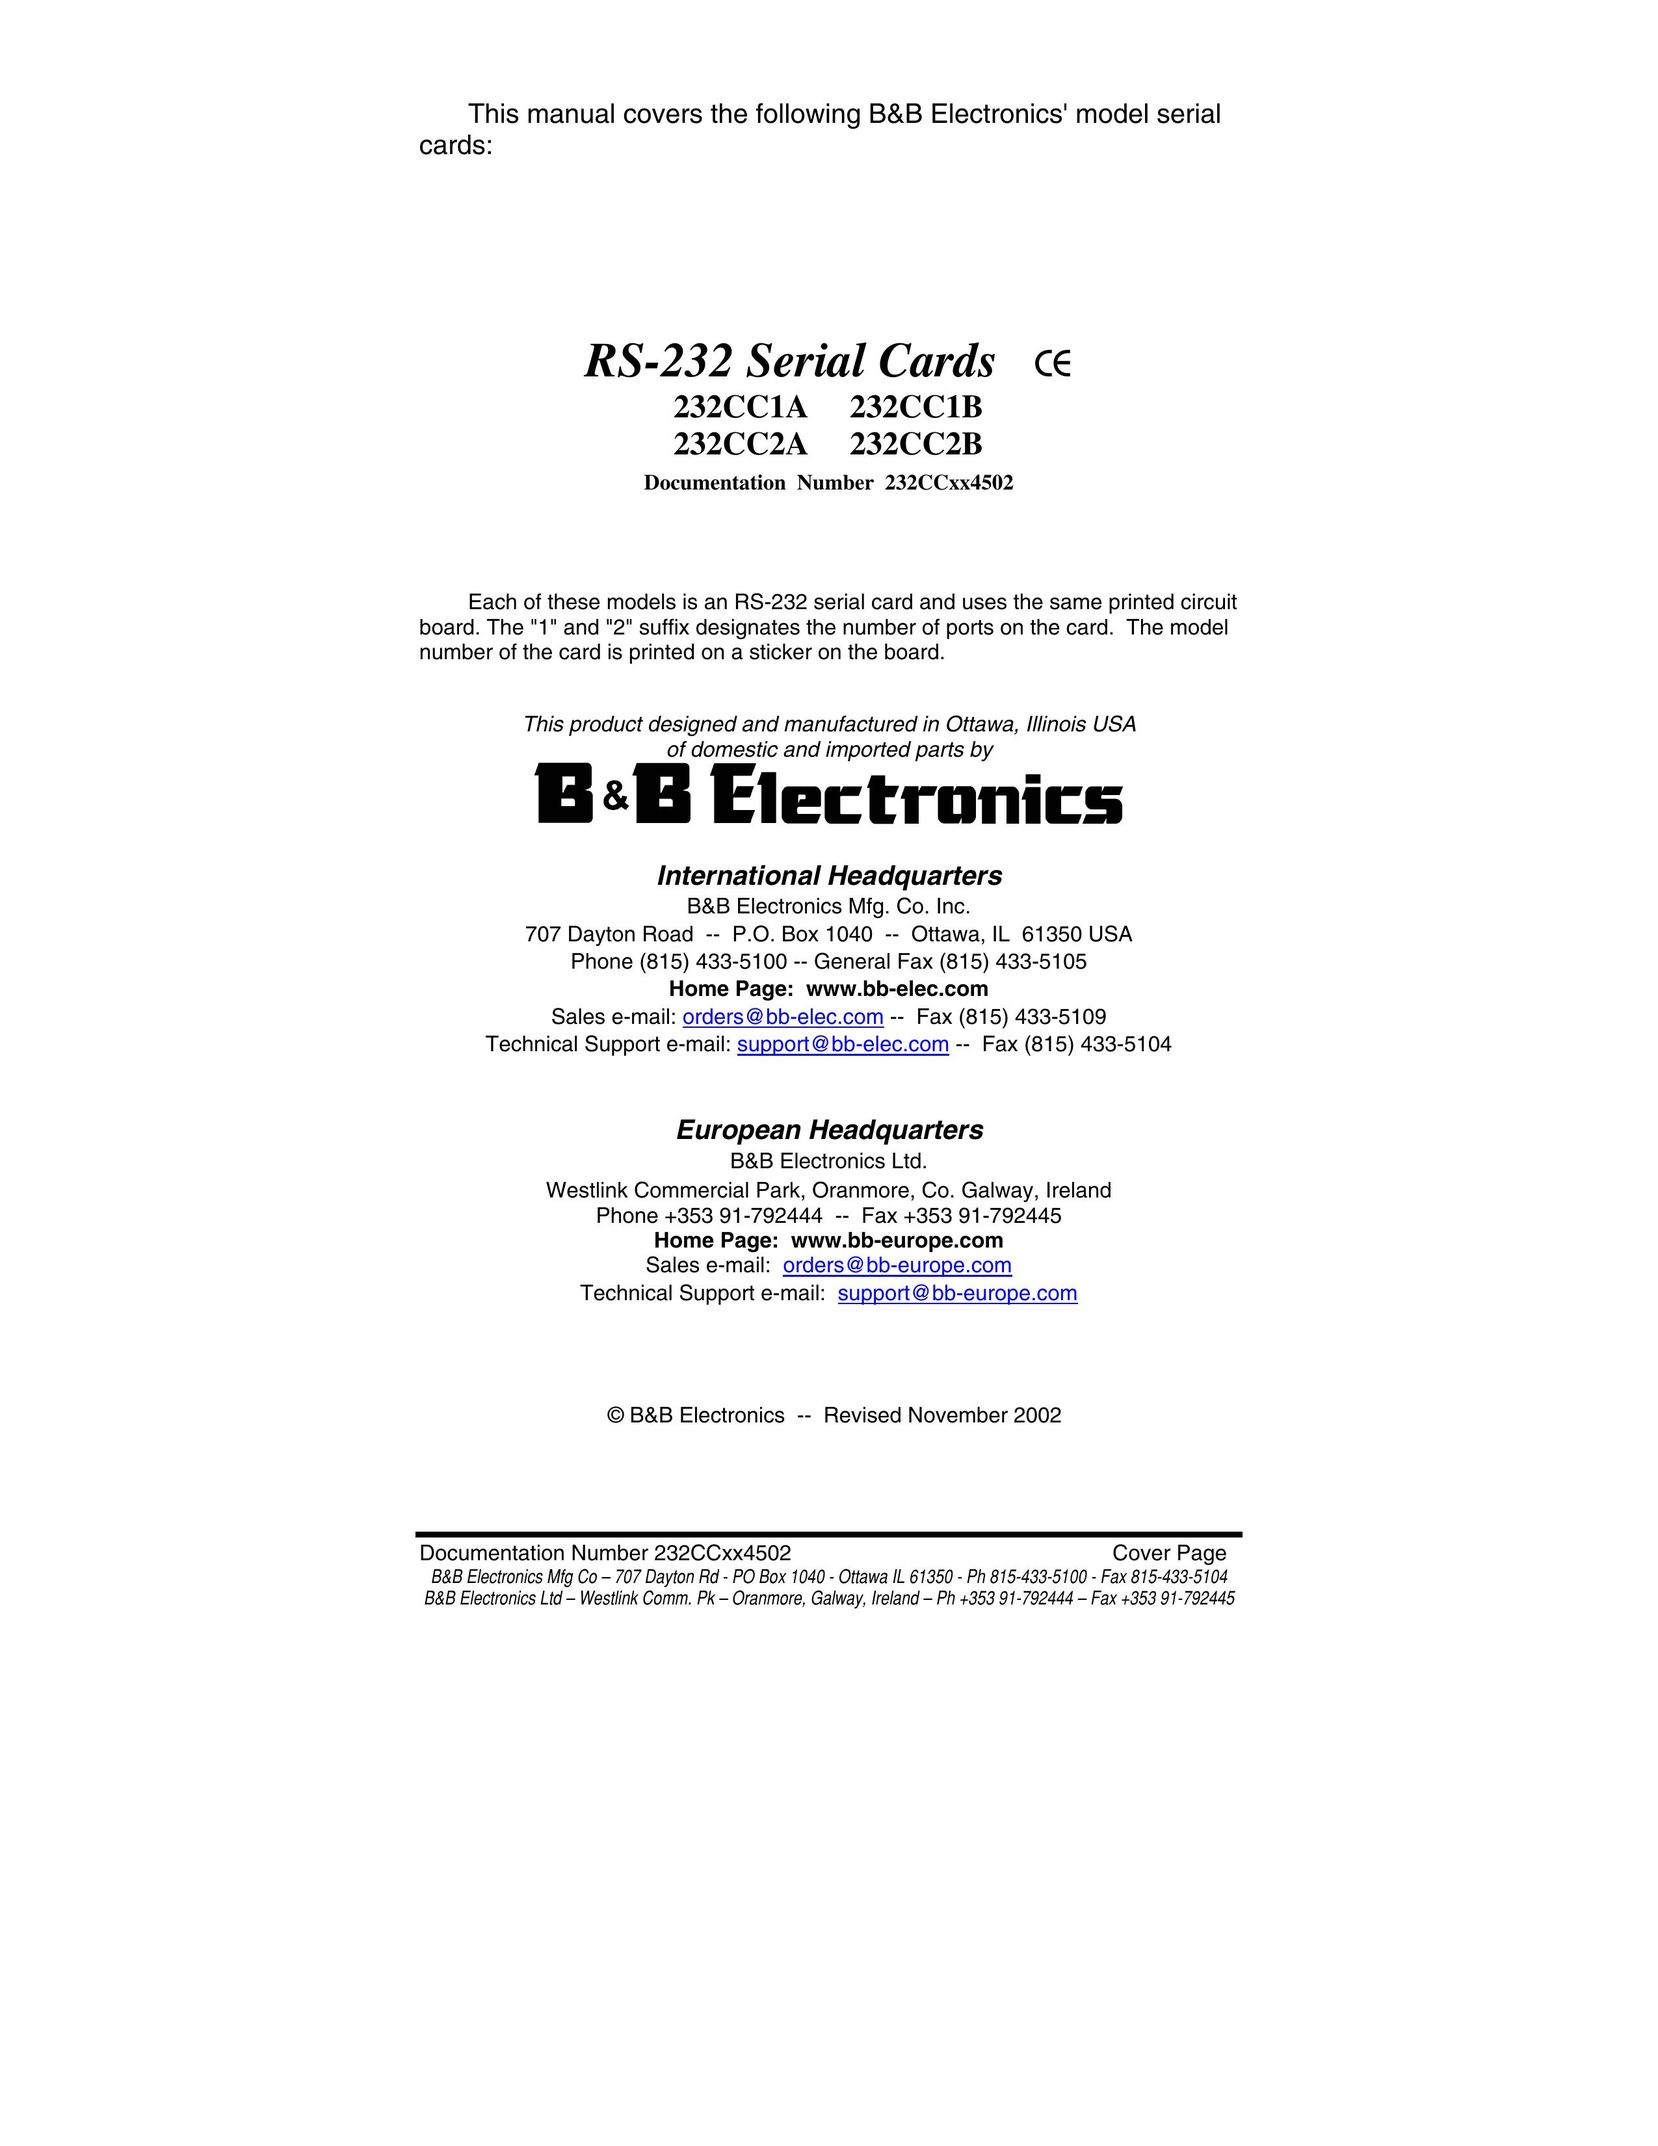 B&B Electronics 232CC1B Computer Hardware User Manual